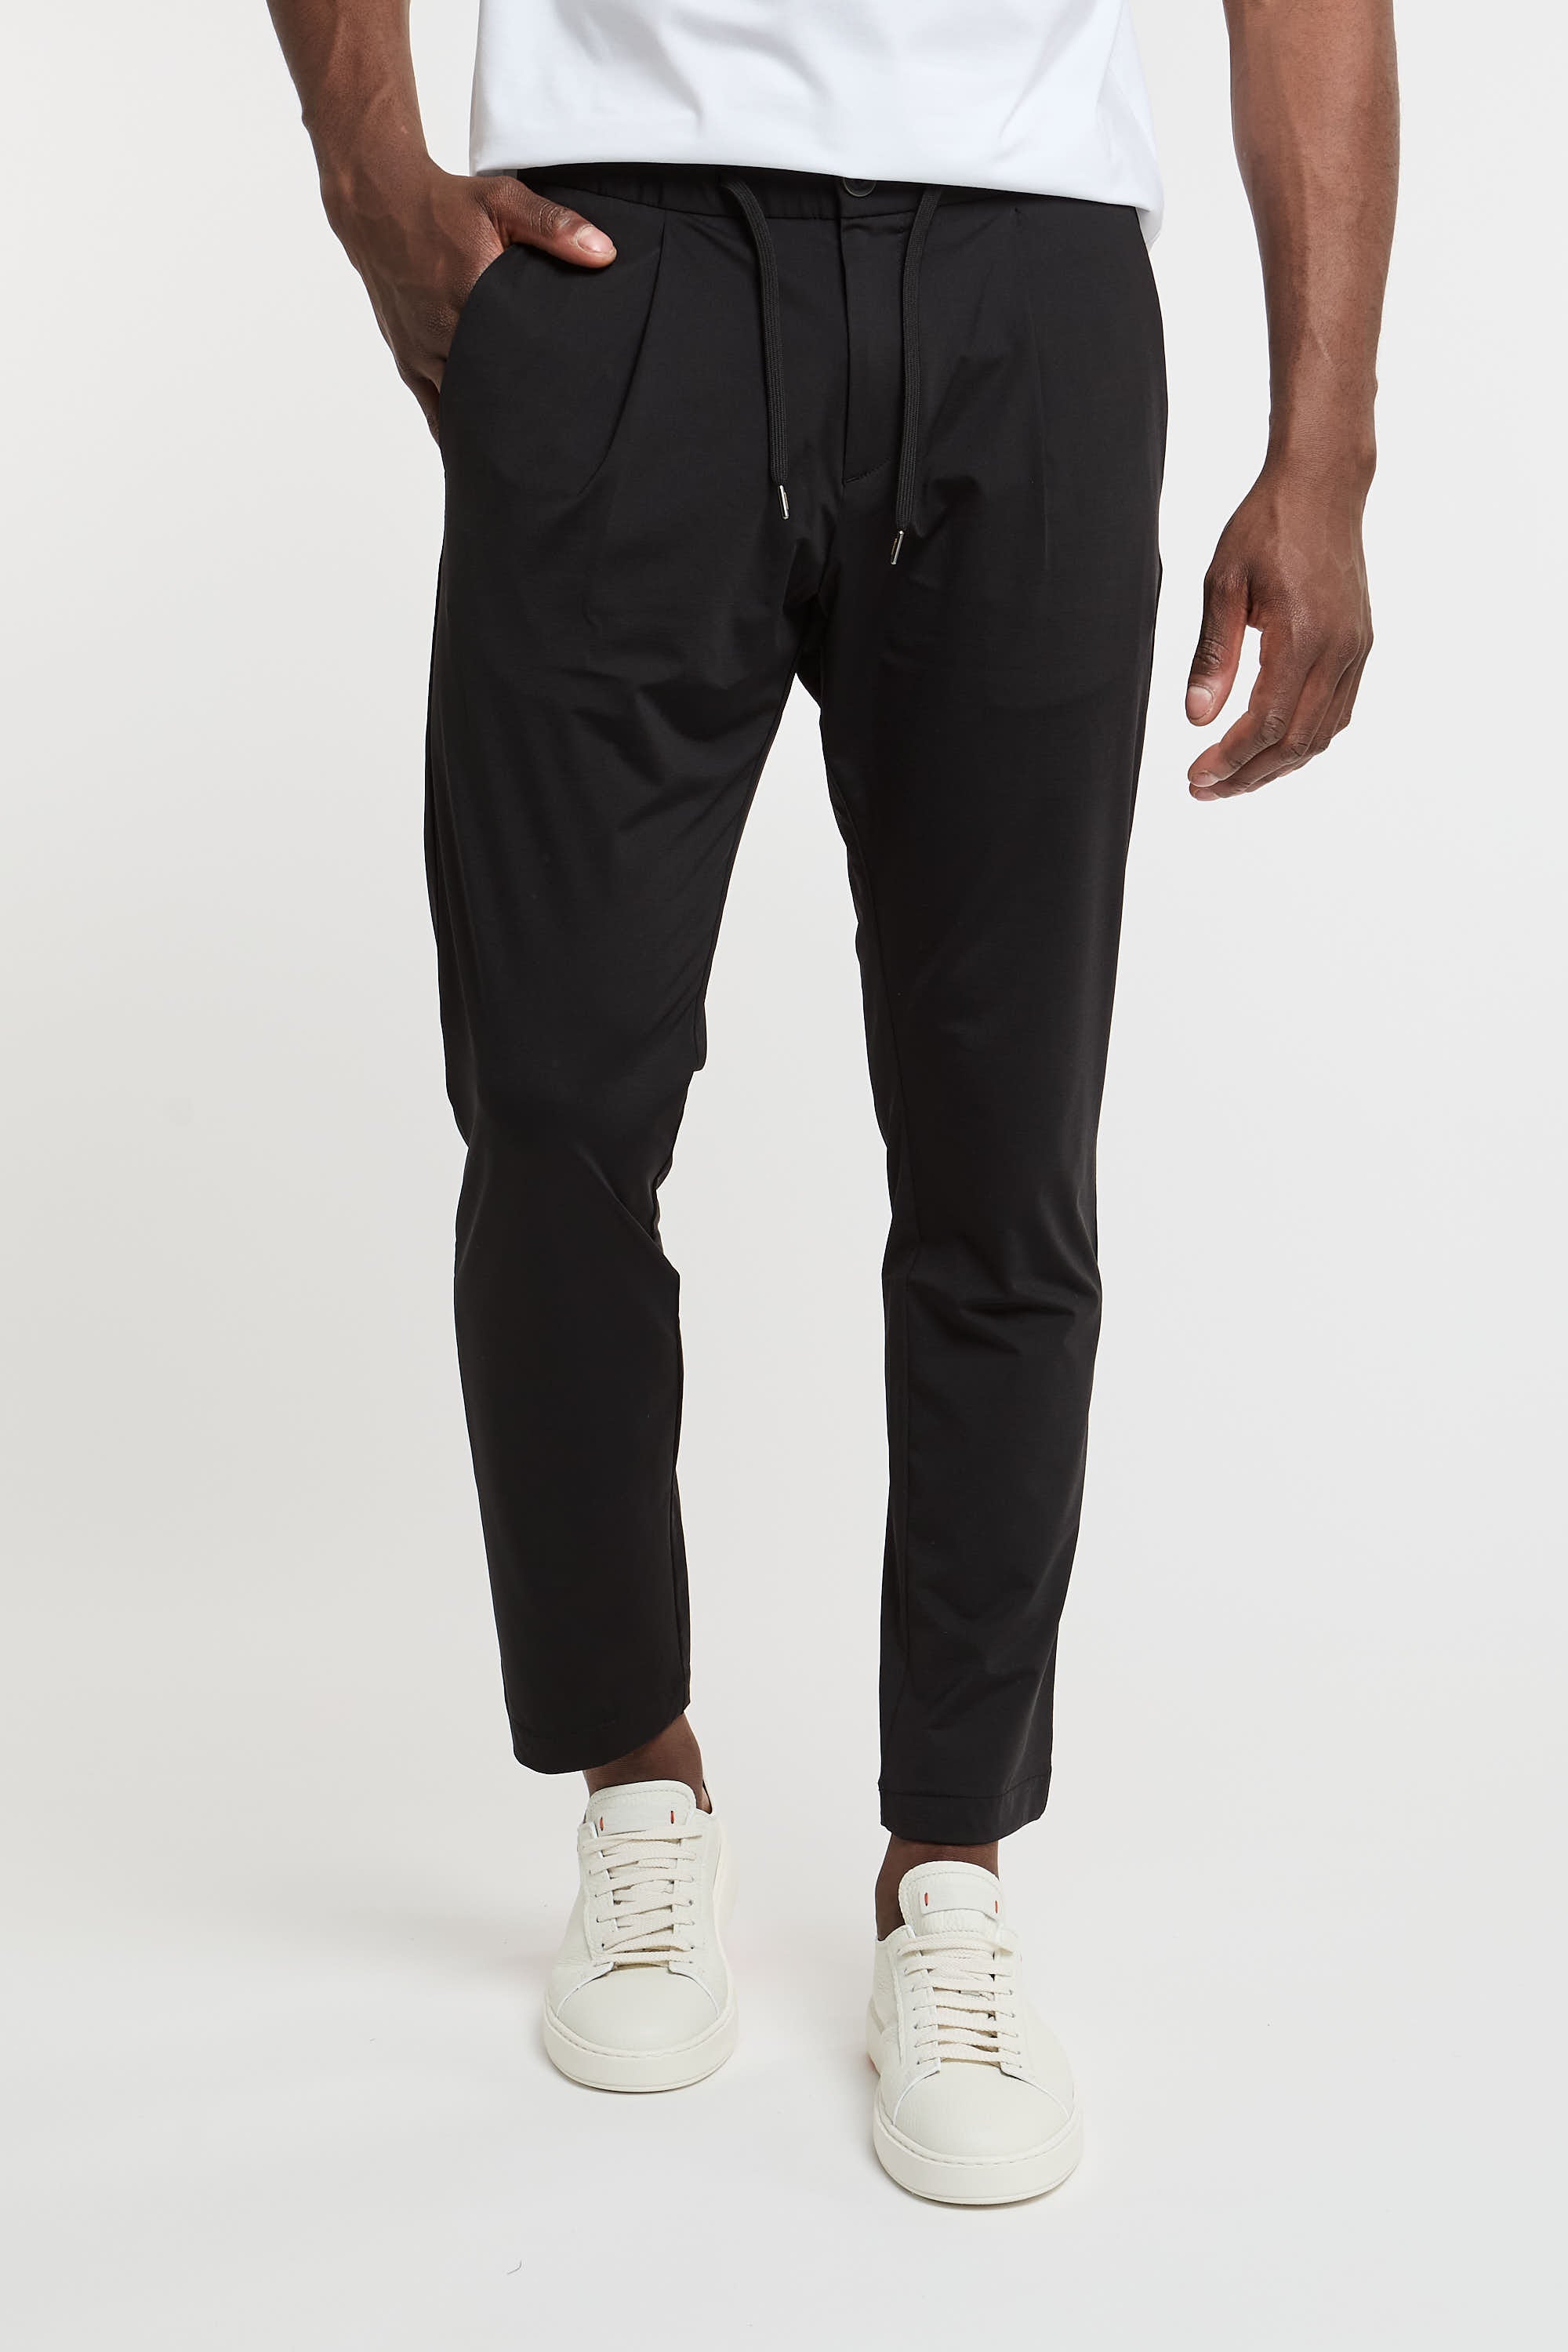 Pantalone in nylon jersey-1